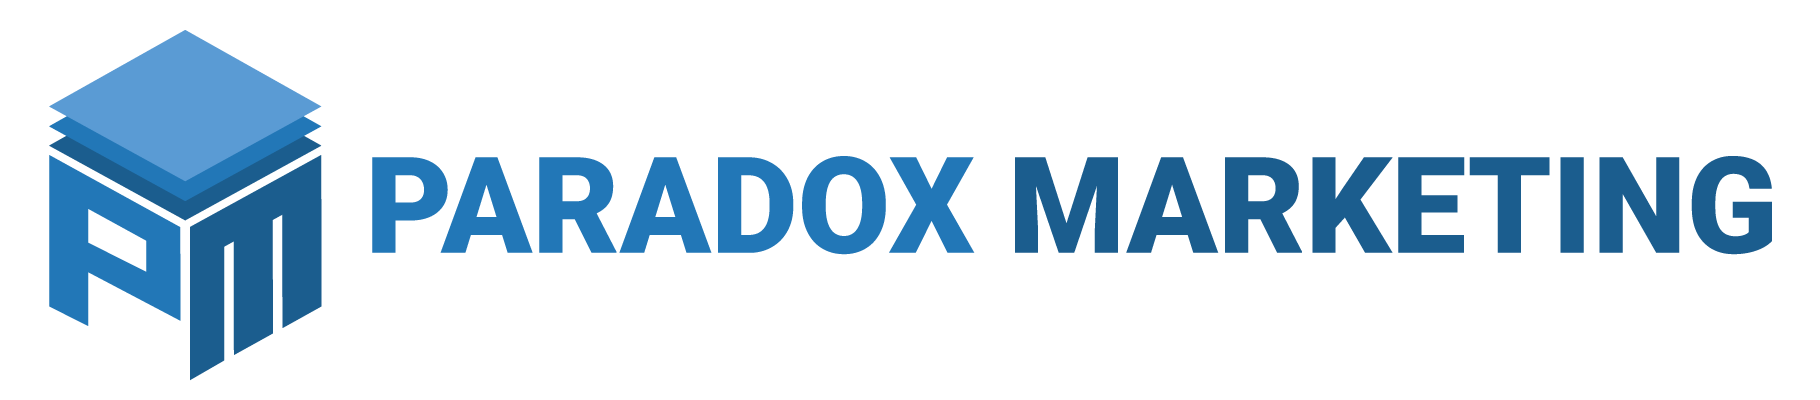 Paradox-Marketing-Logo